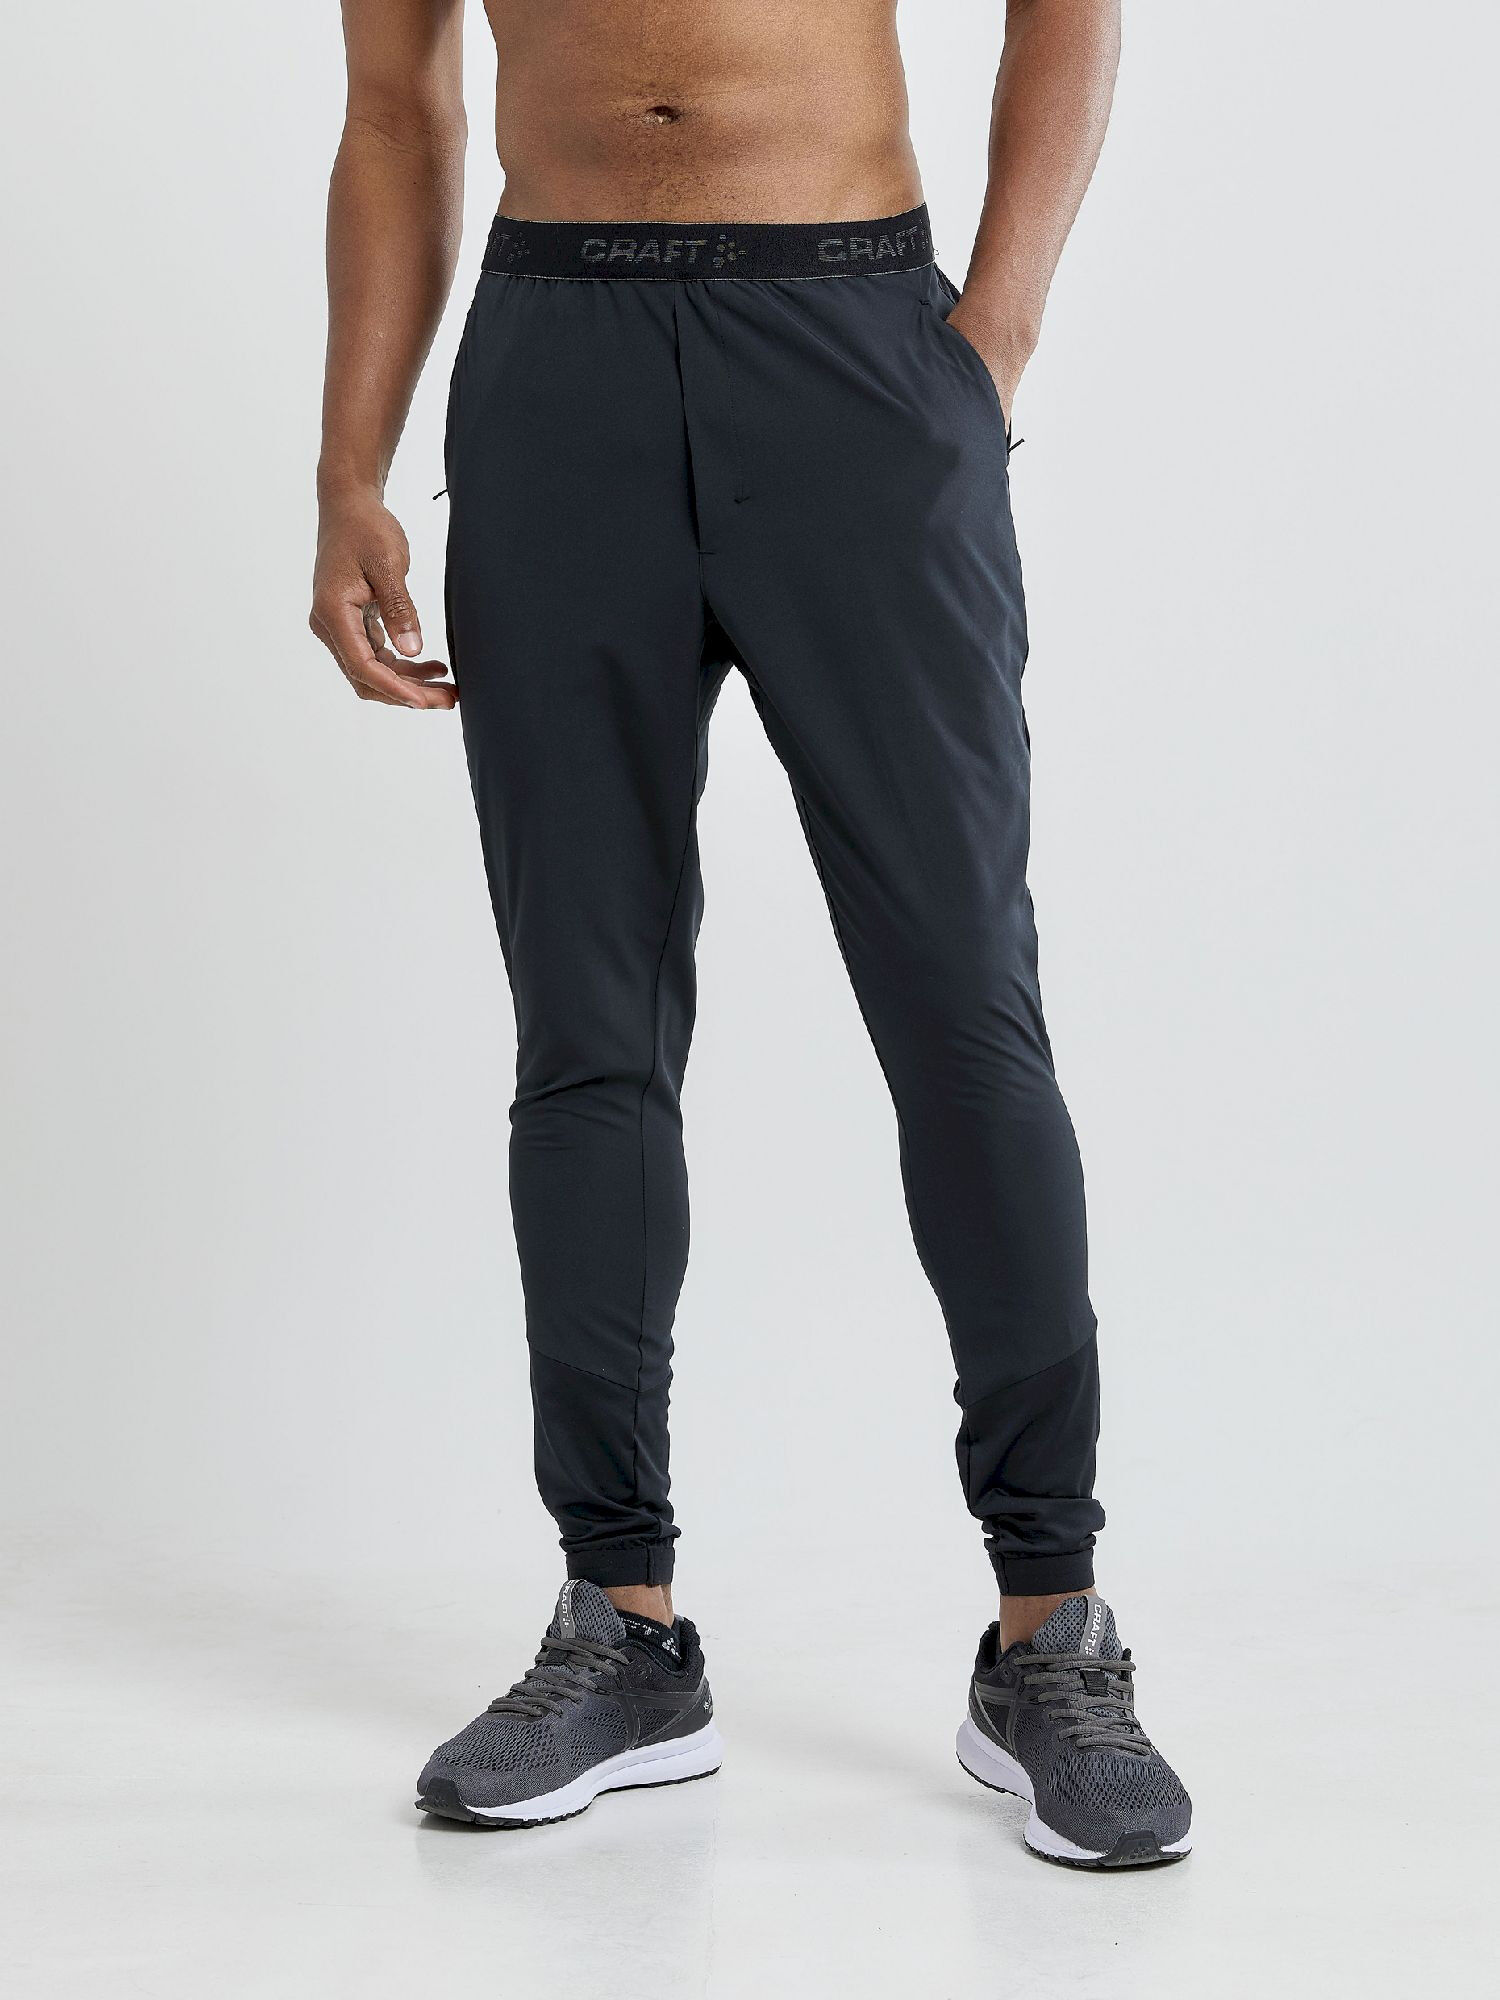 Craft ADV Essence Training Pants - Running trouser - Men's | Hardloop